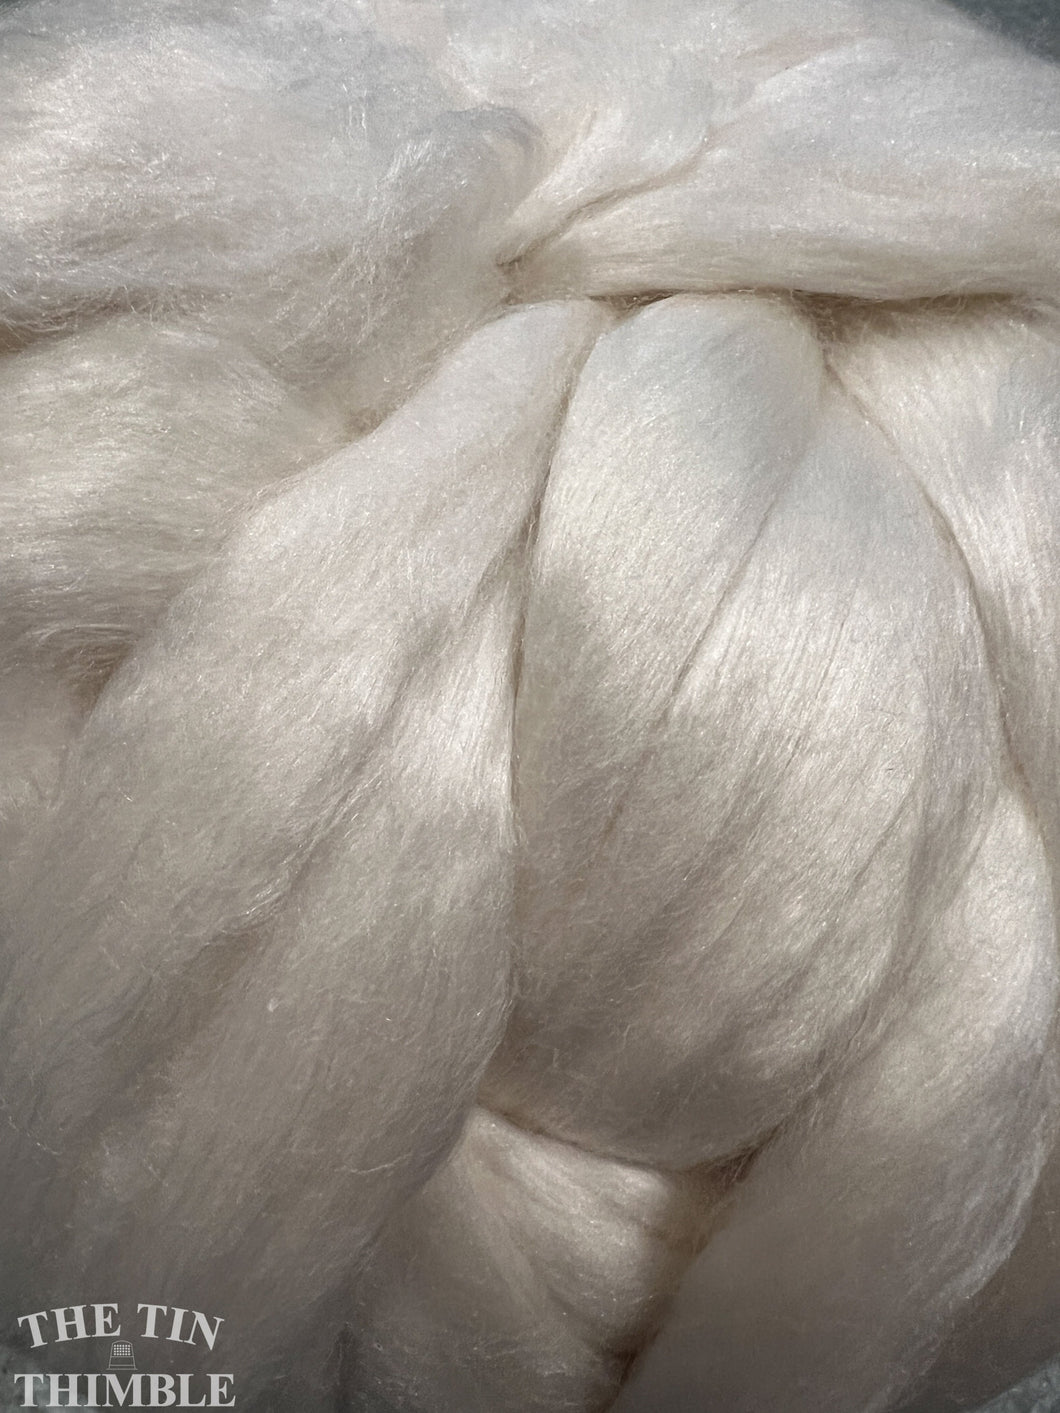 Bombyx Silk and Merino 50/50 Blend Roving for Spinning or Felting - Natural Ecru Fiber with Lovely Sheen